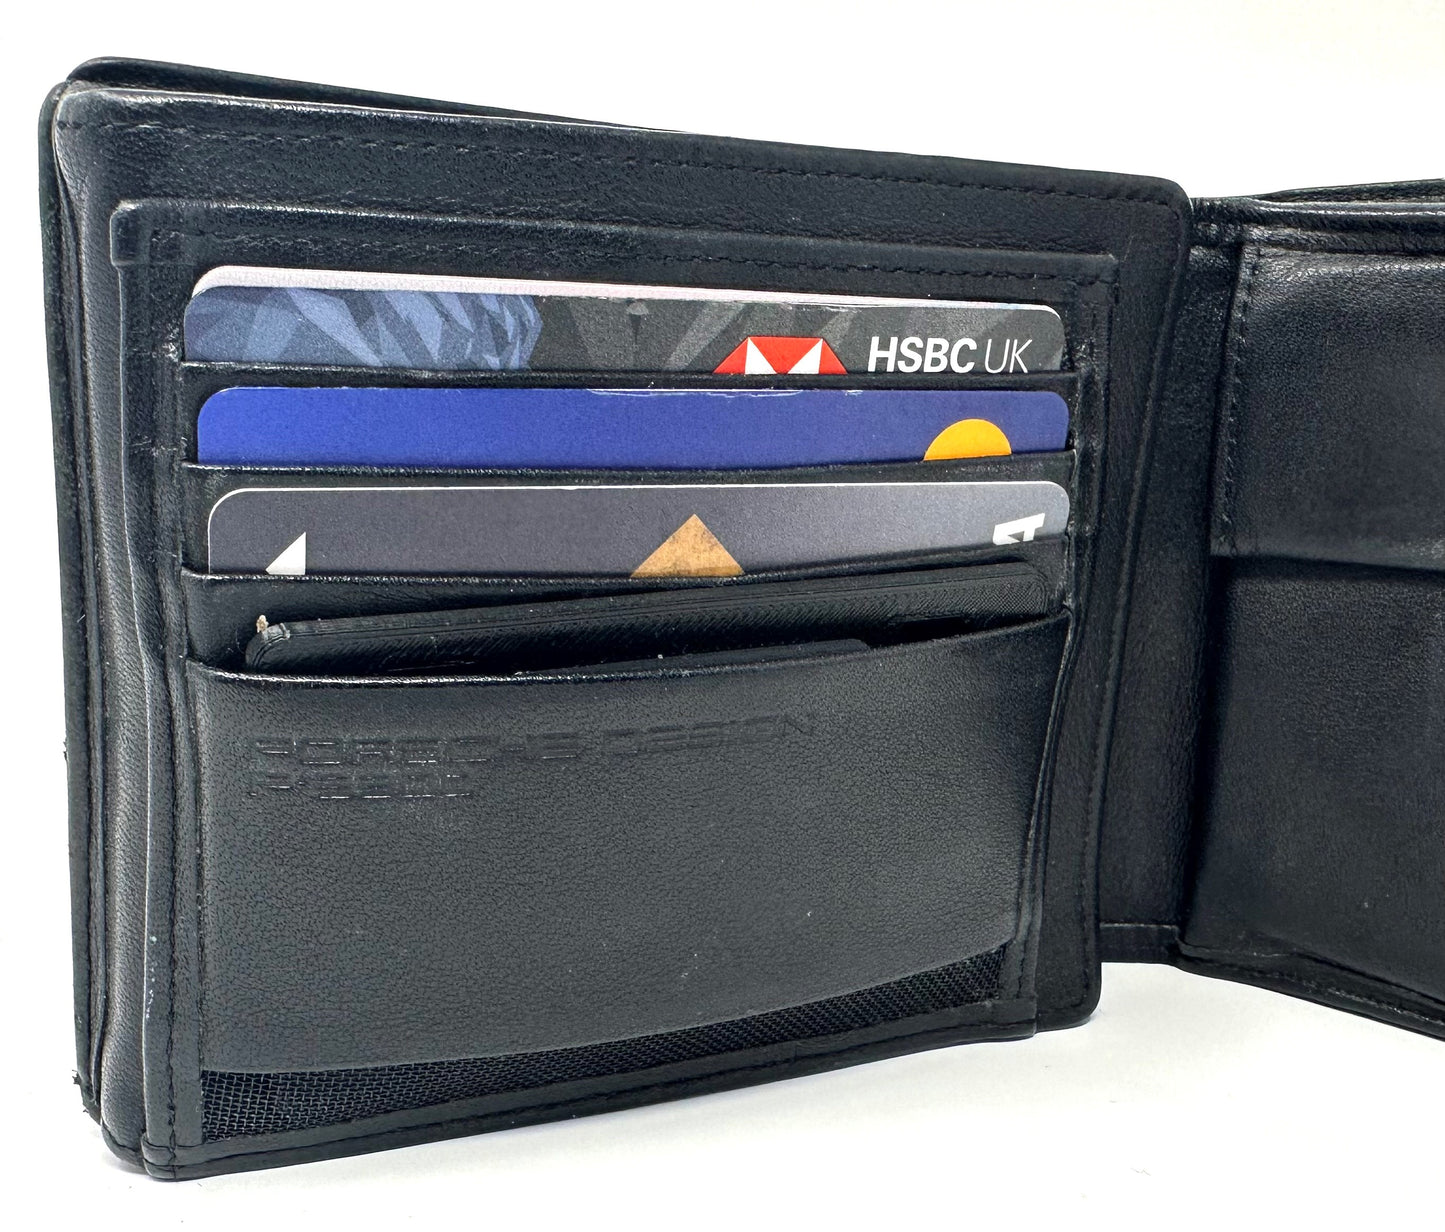 eufy Credit Card Sized Wallet/Purse/Clutch Bag Holder